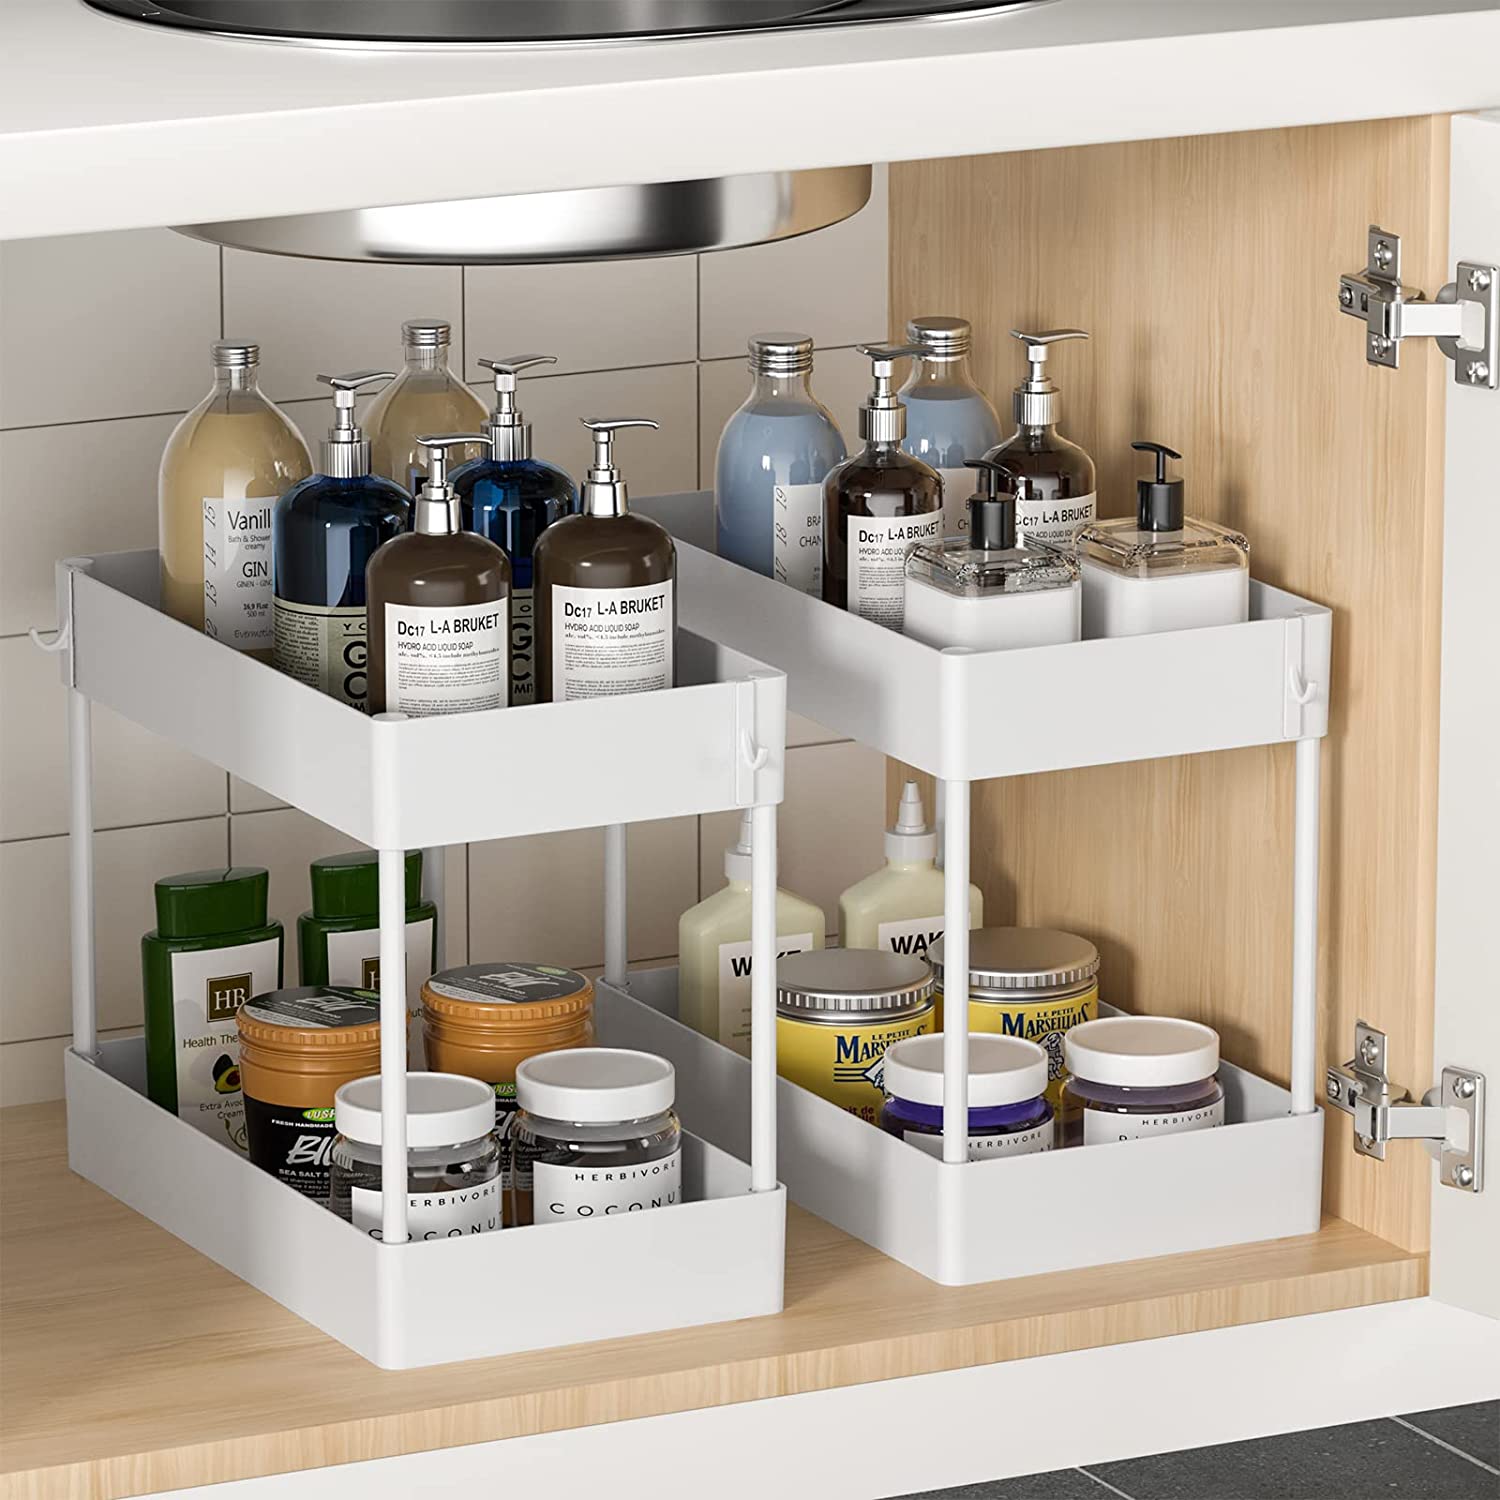 4070 Under Sink Organizers, Practical, Durable, Easy to Clean, Under Sink Shelf for Kitchens DeoDap